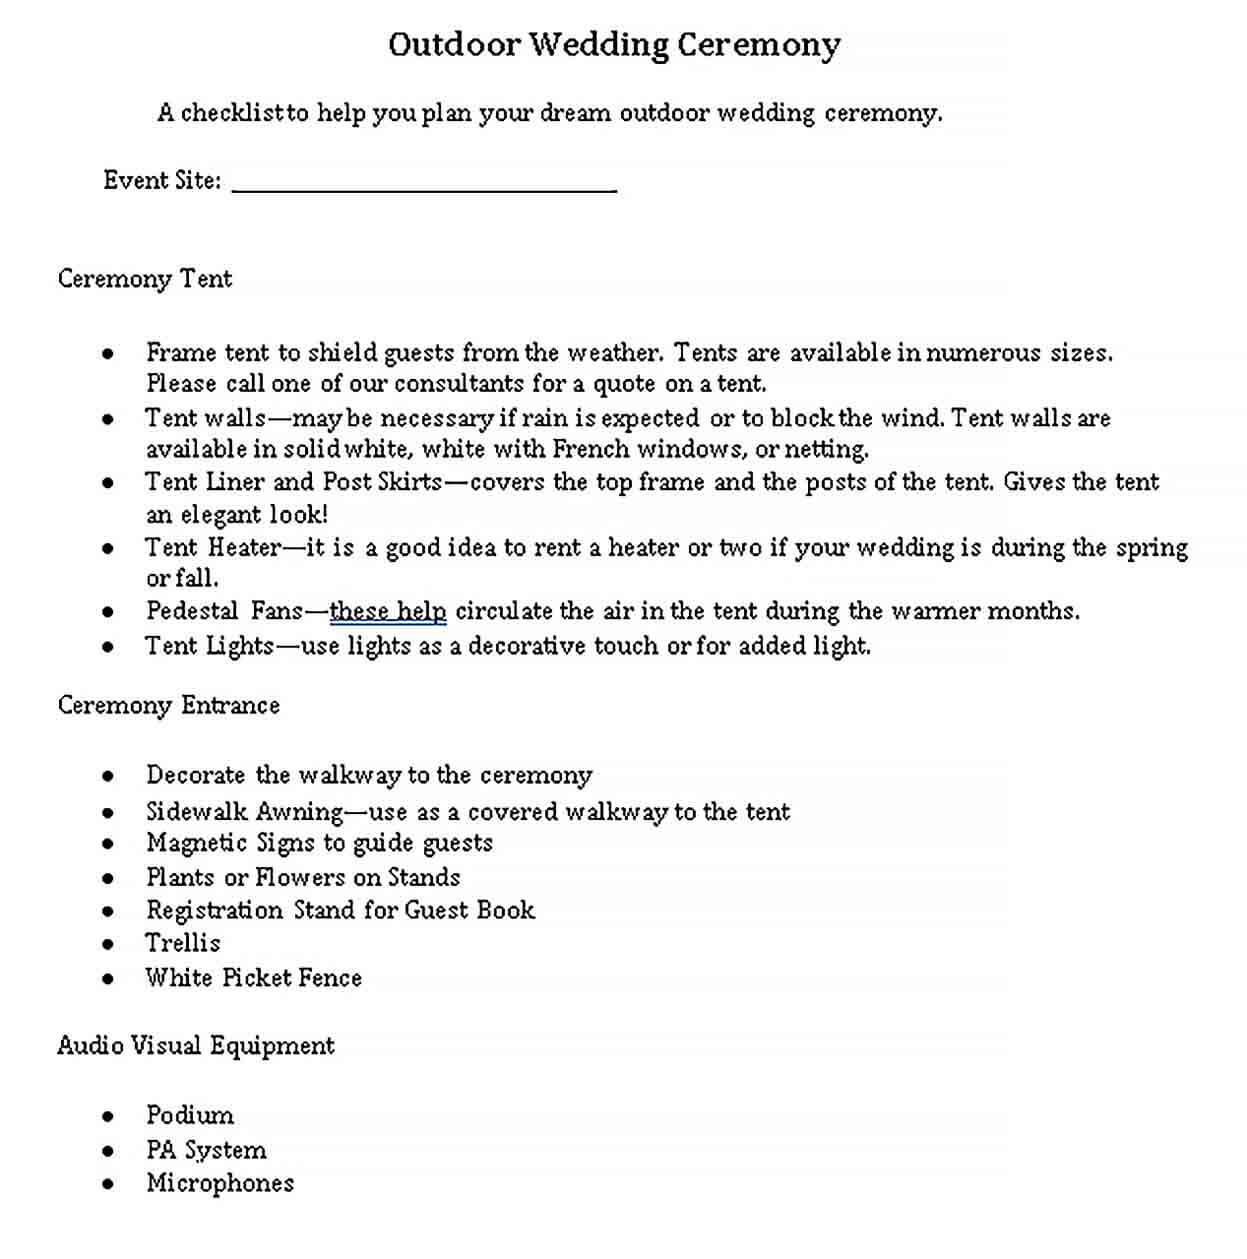 Sample Outdoor Wedding Ceremony